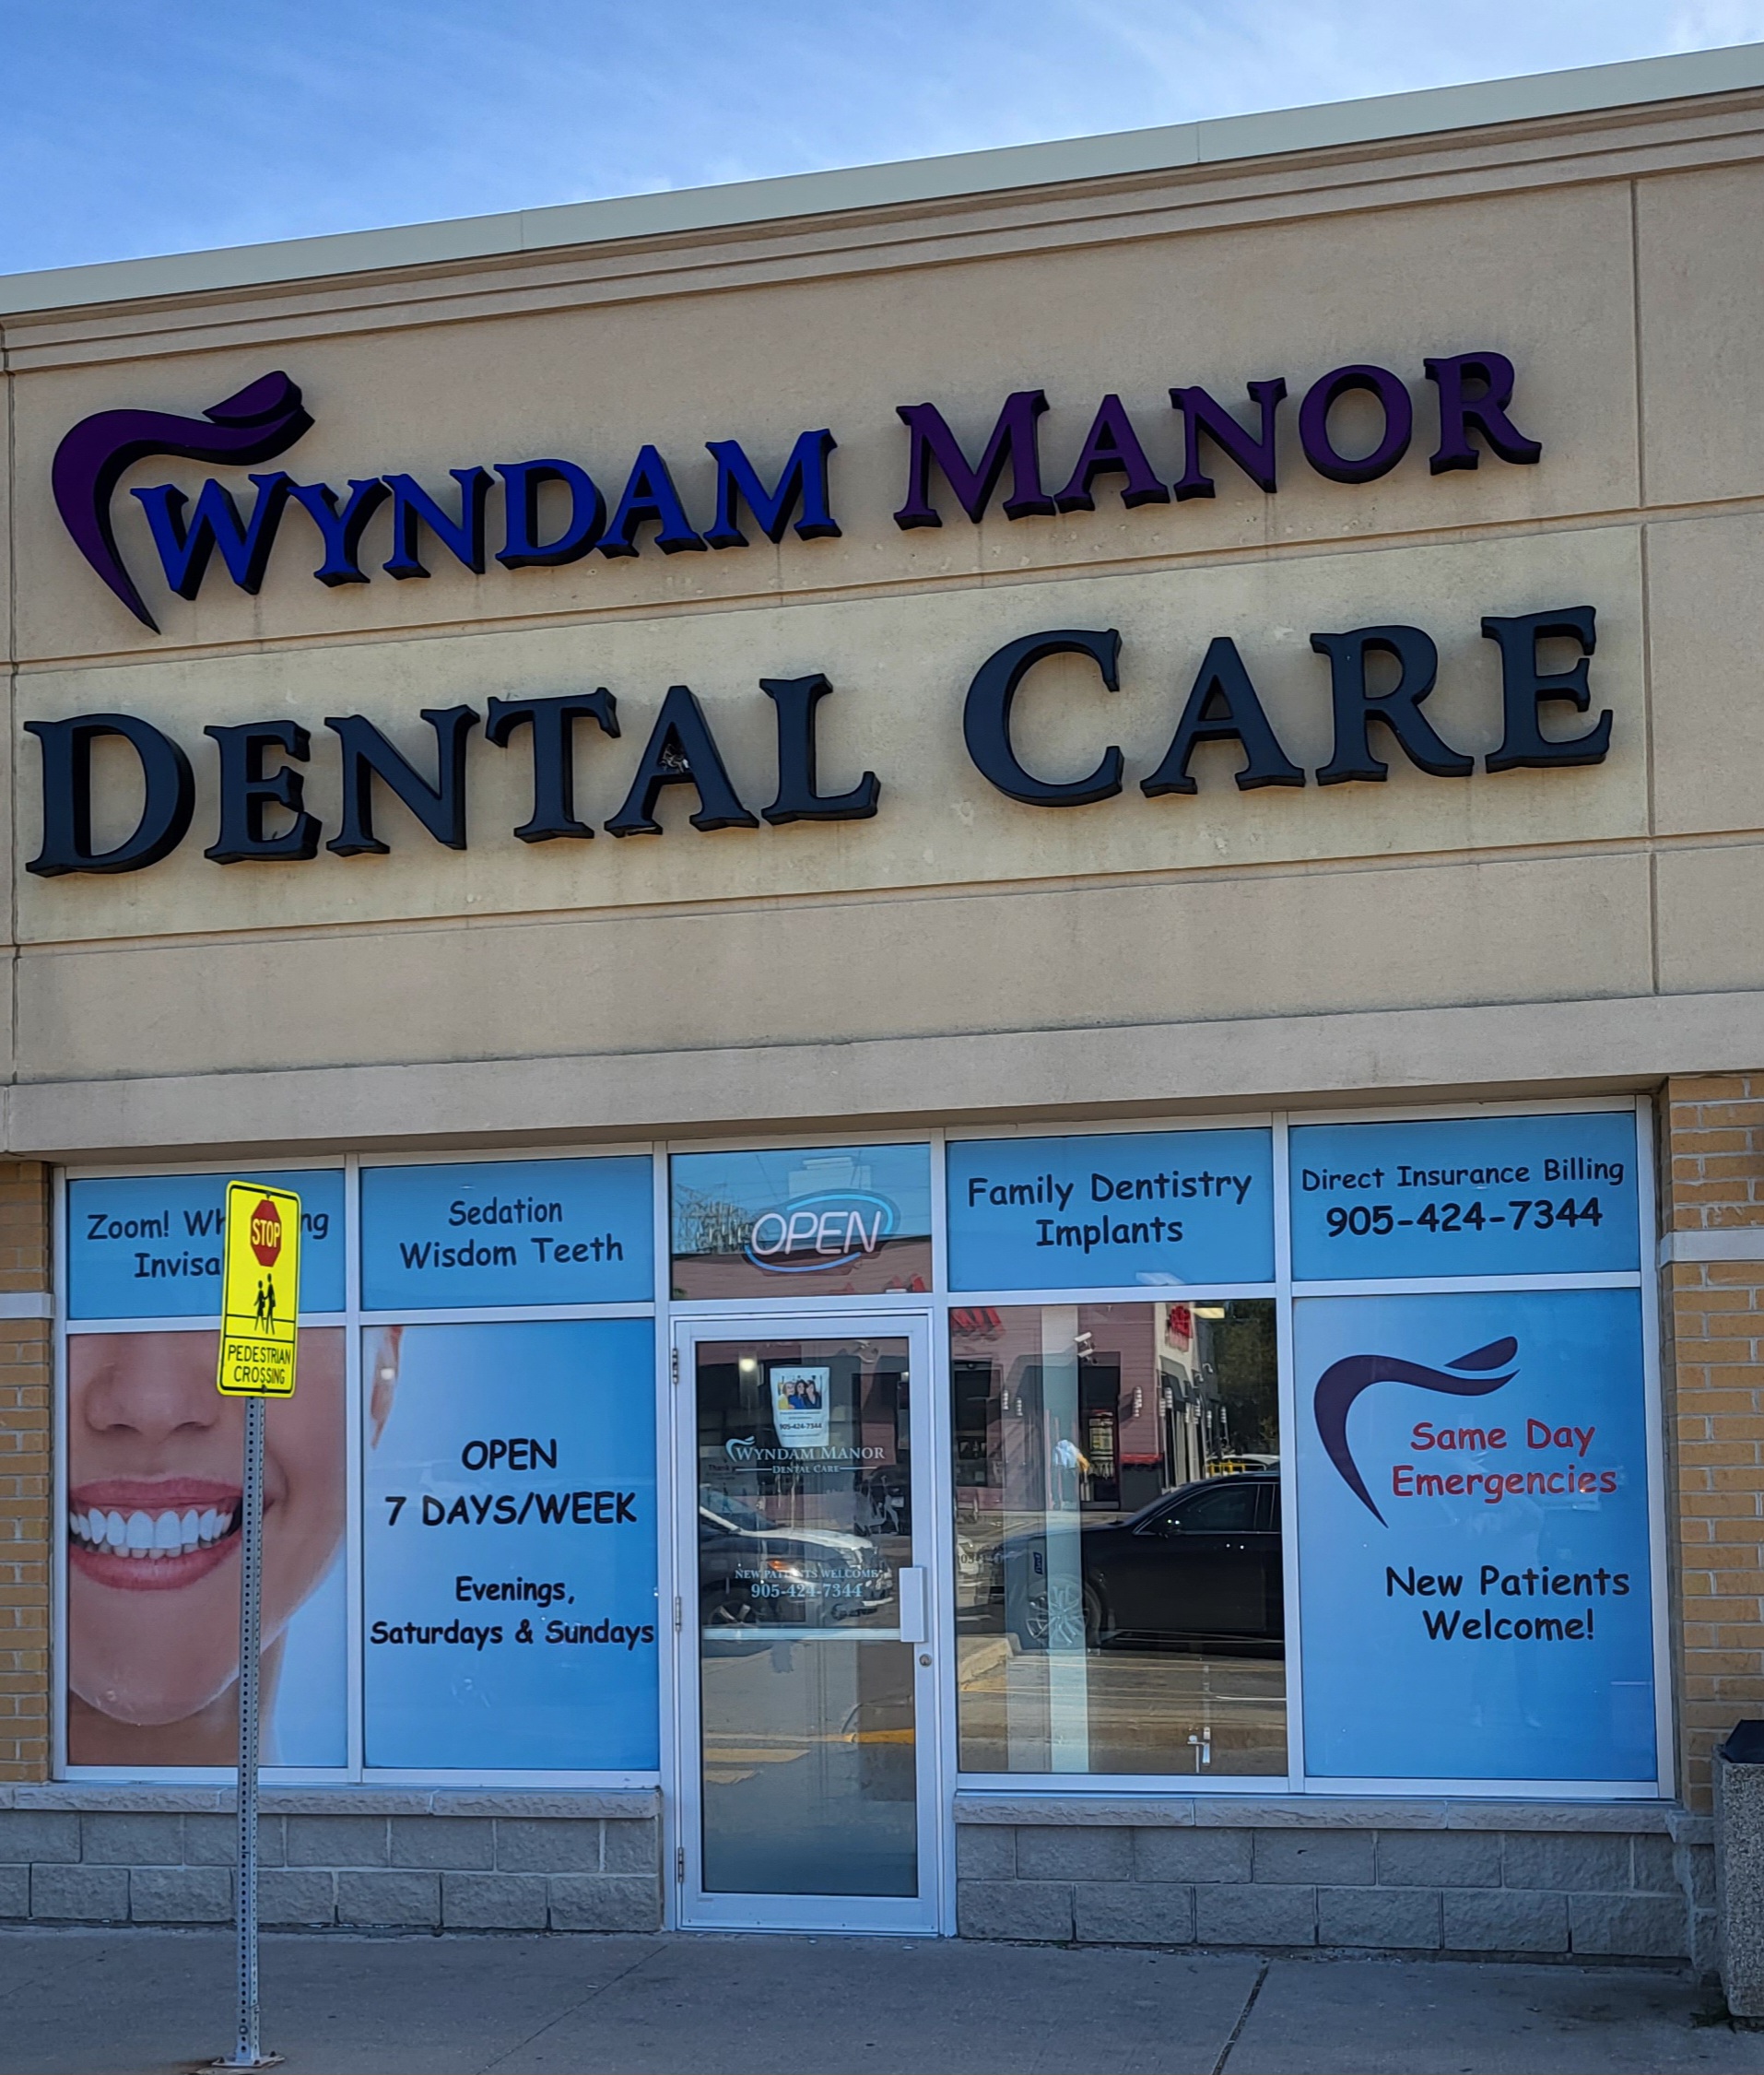 Wyndam Manor Dental Care office